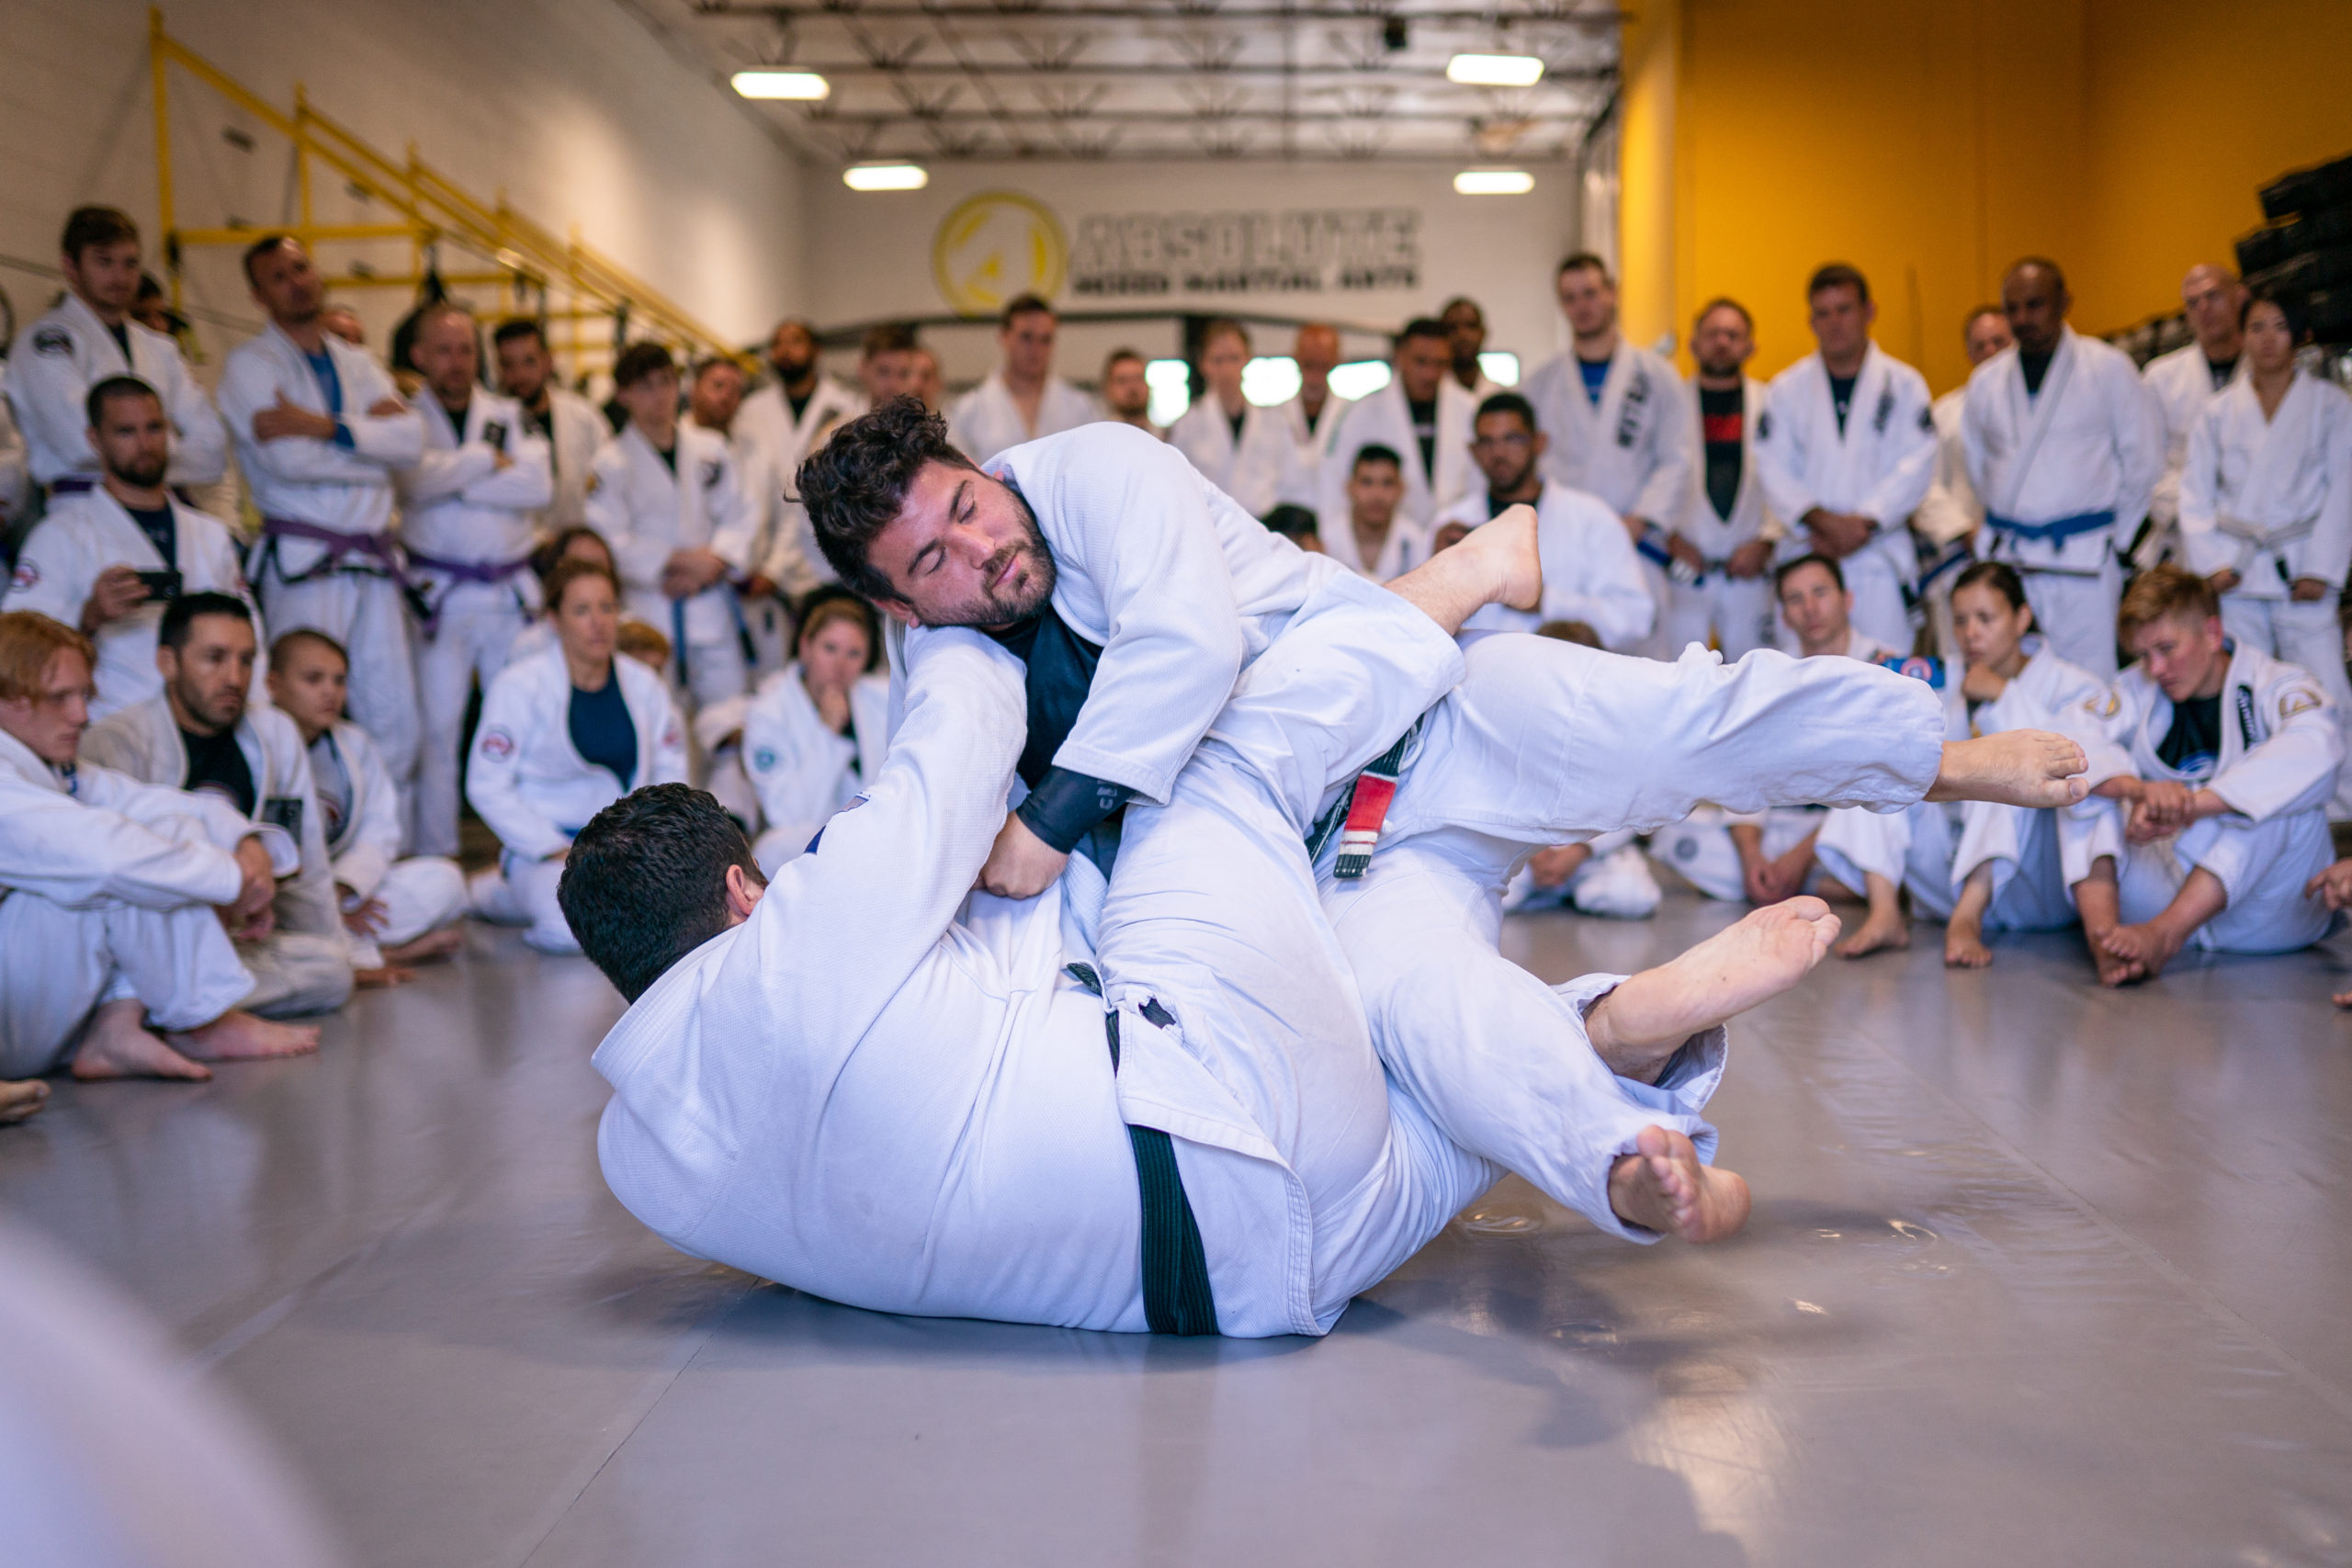 Judo Classes Utah Best Judo Gym and Training Salt Lake